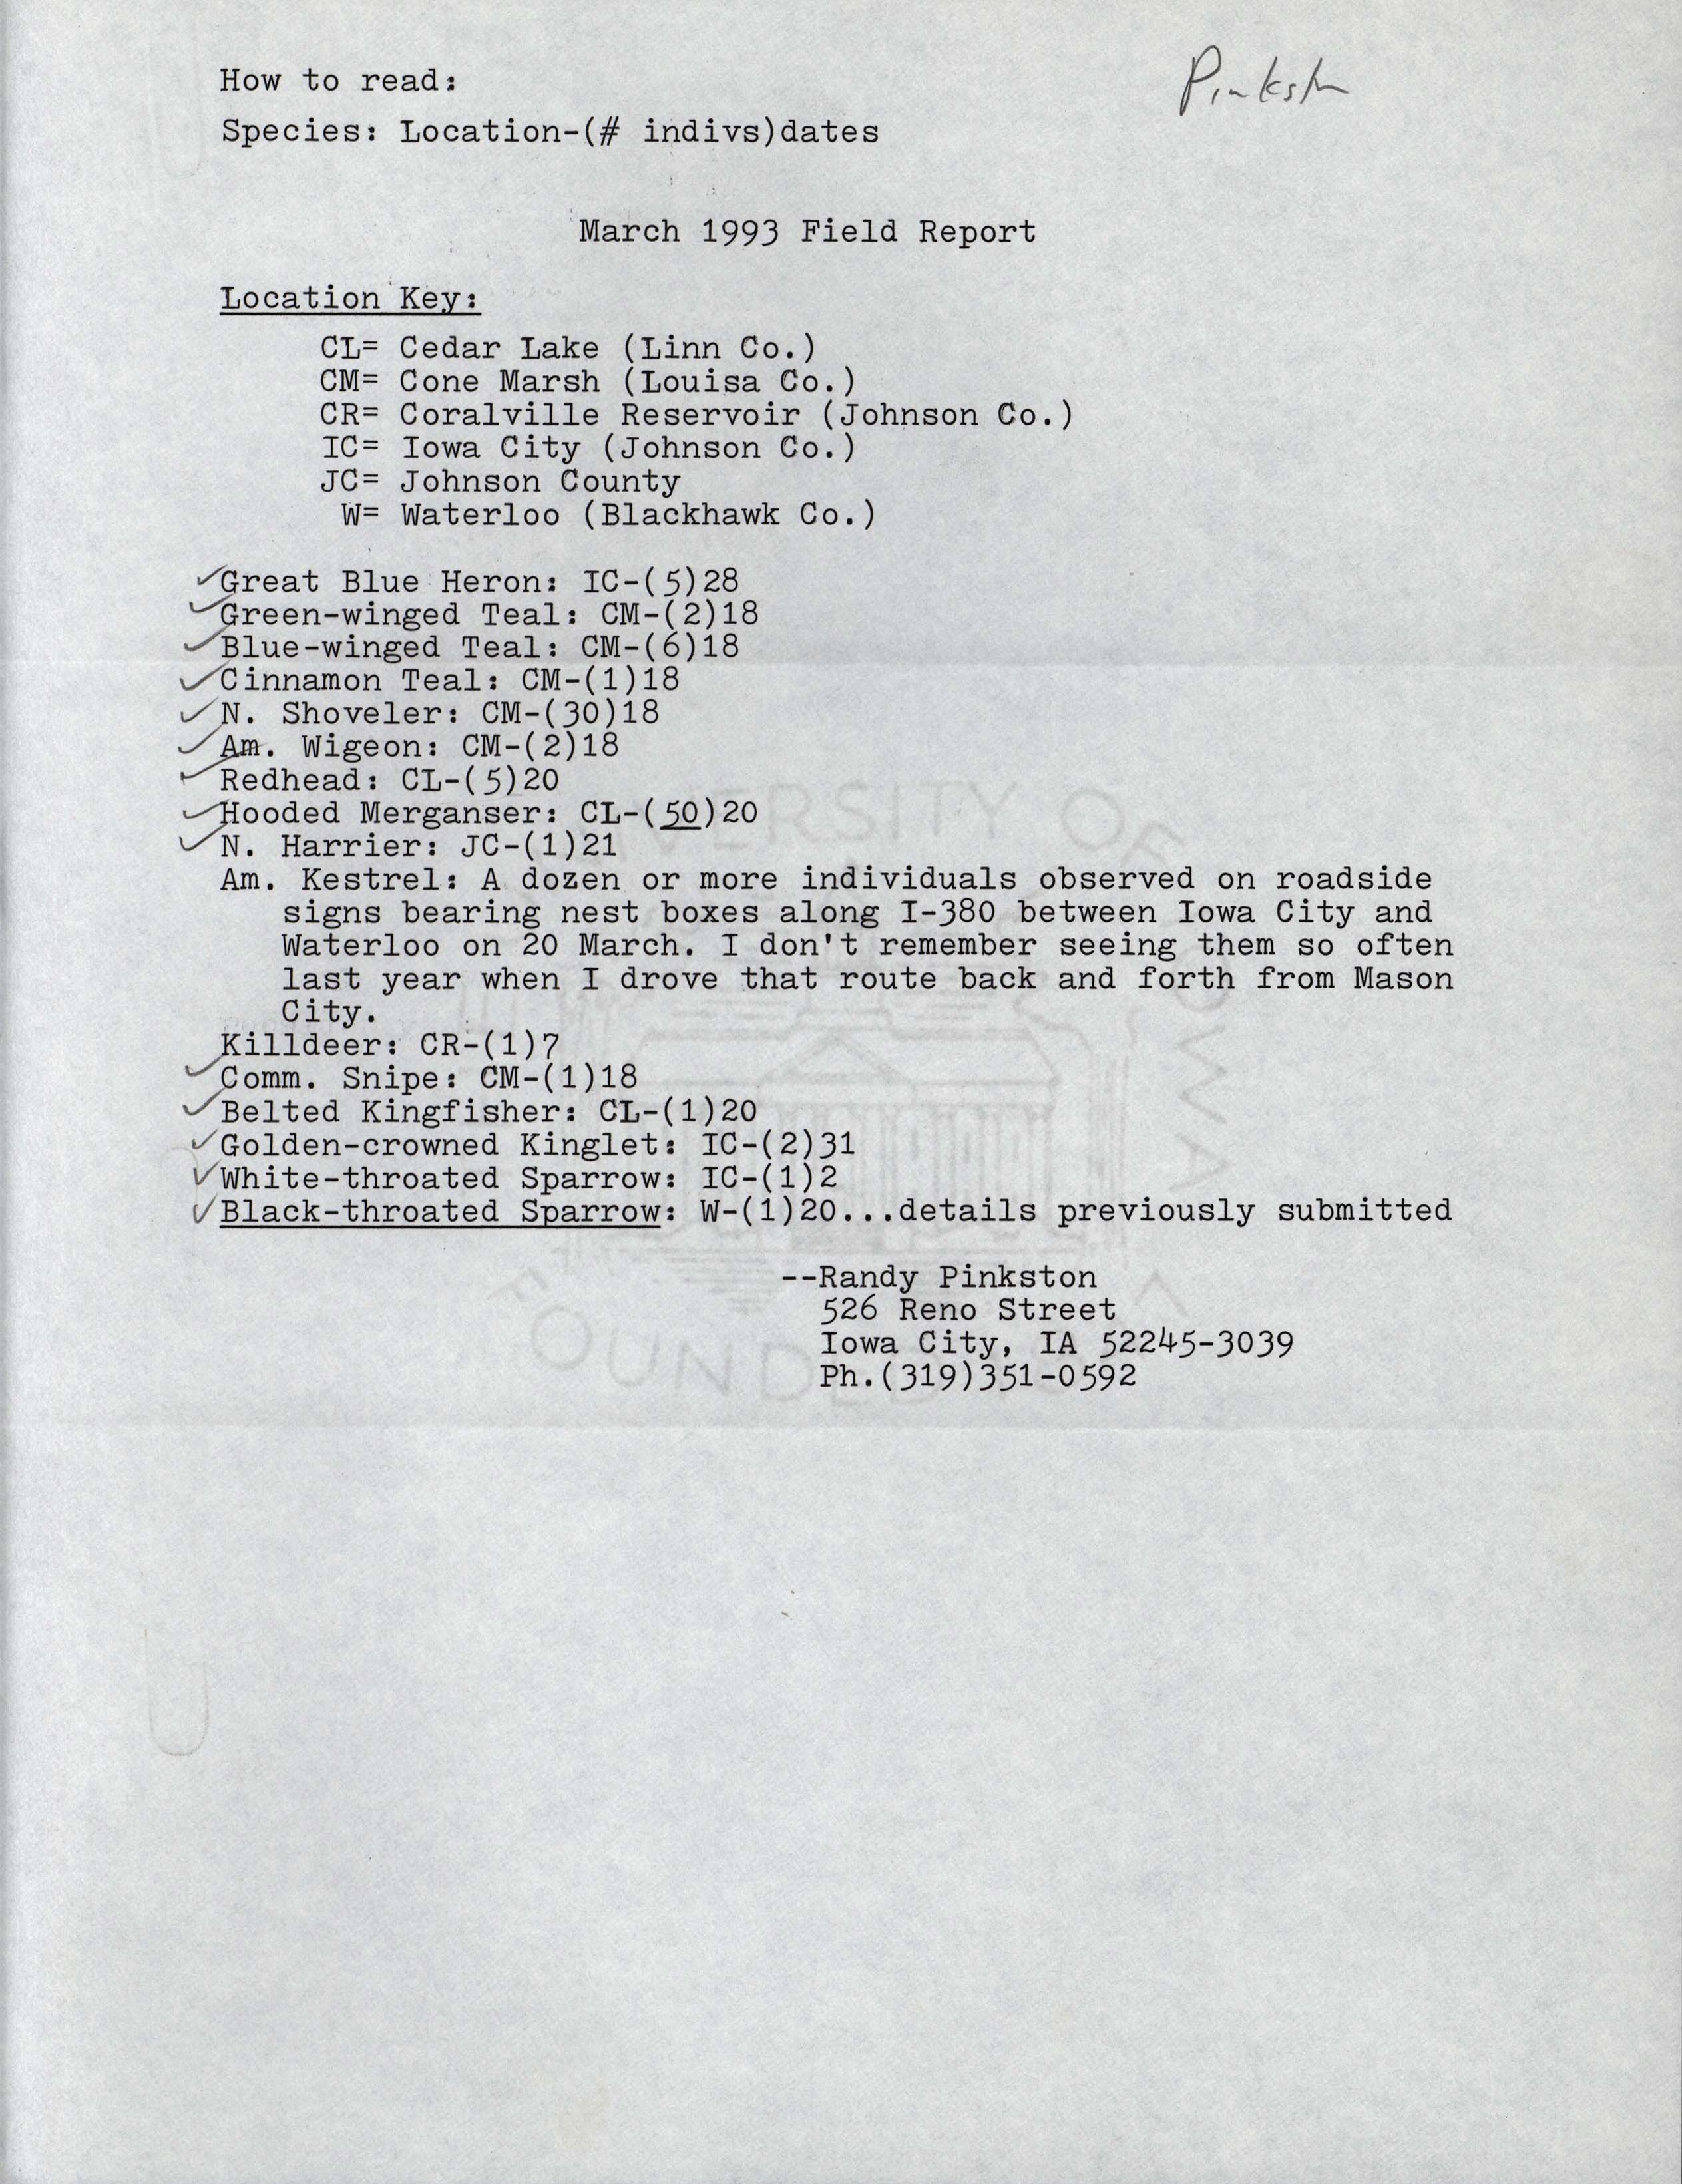 March 1993 field report, Randy Pinkston